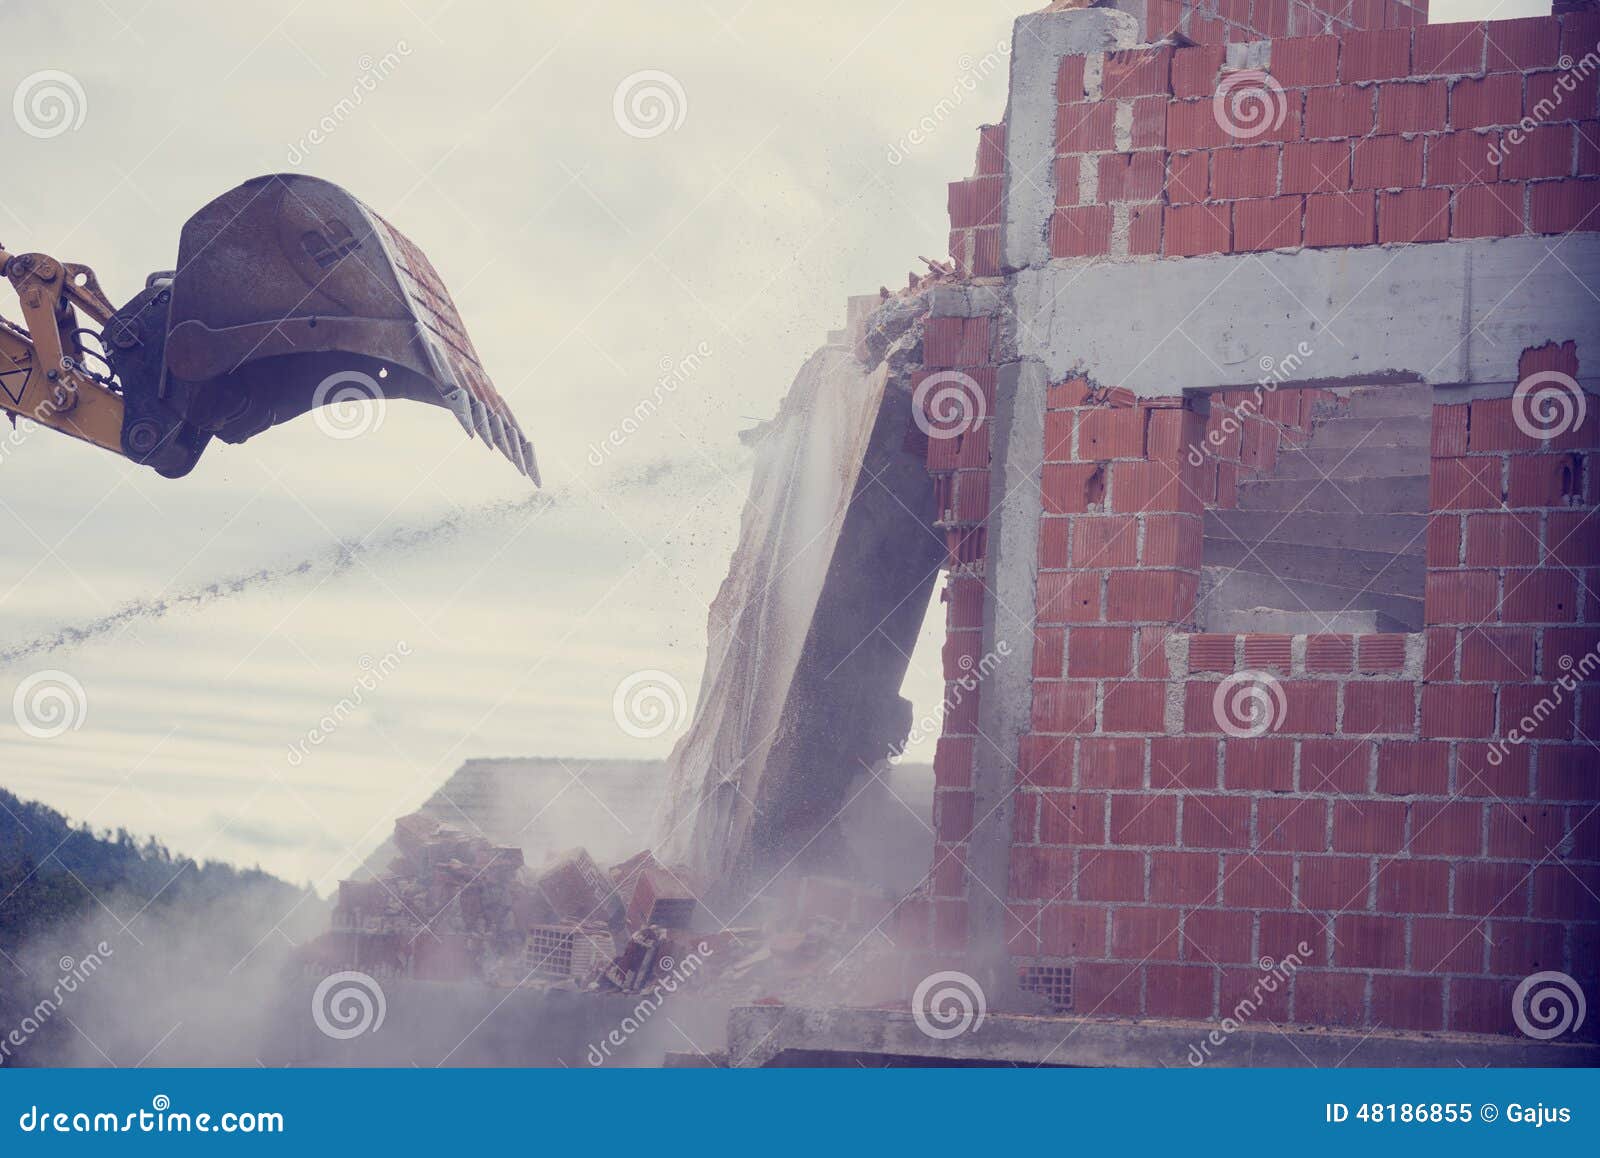 mechanical digger demolishing the wall of a brick building